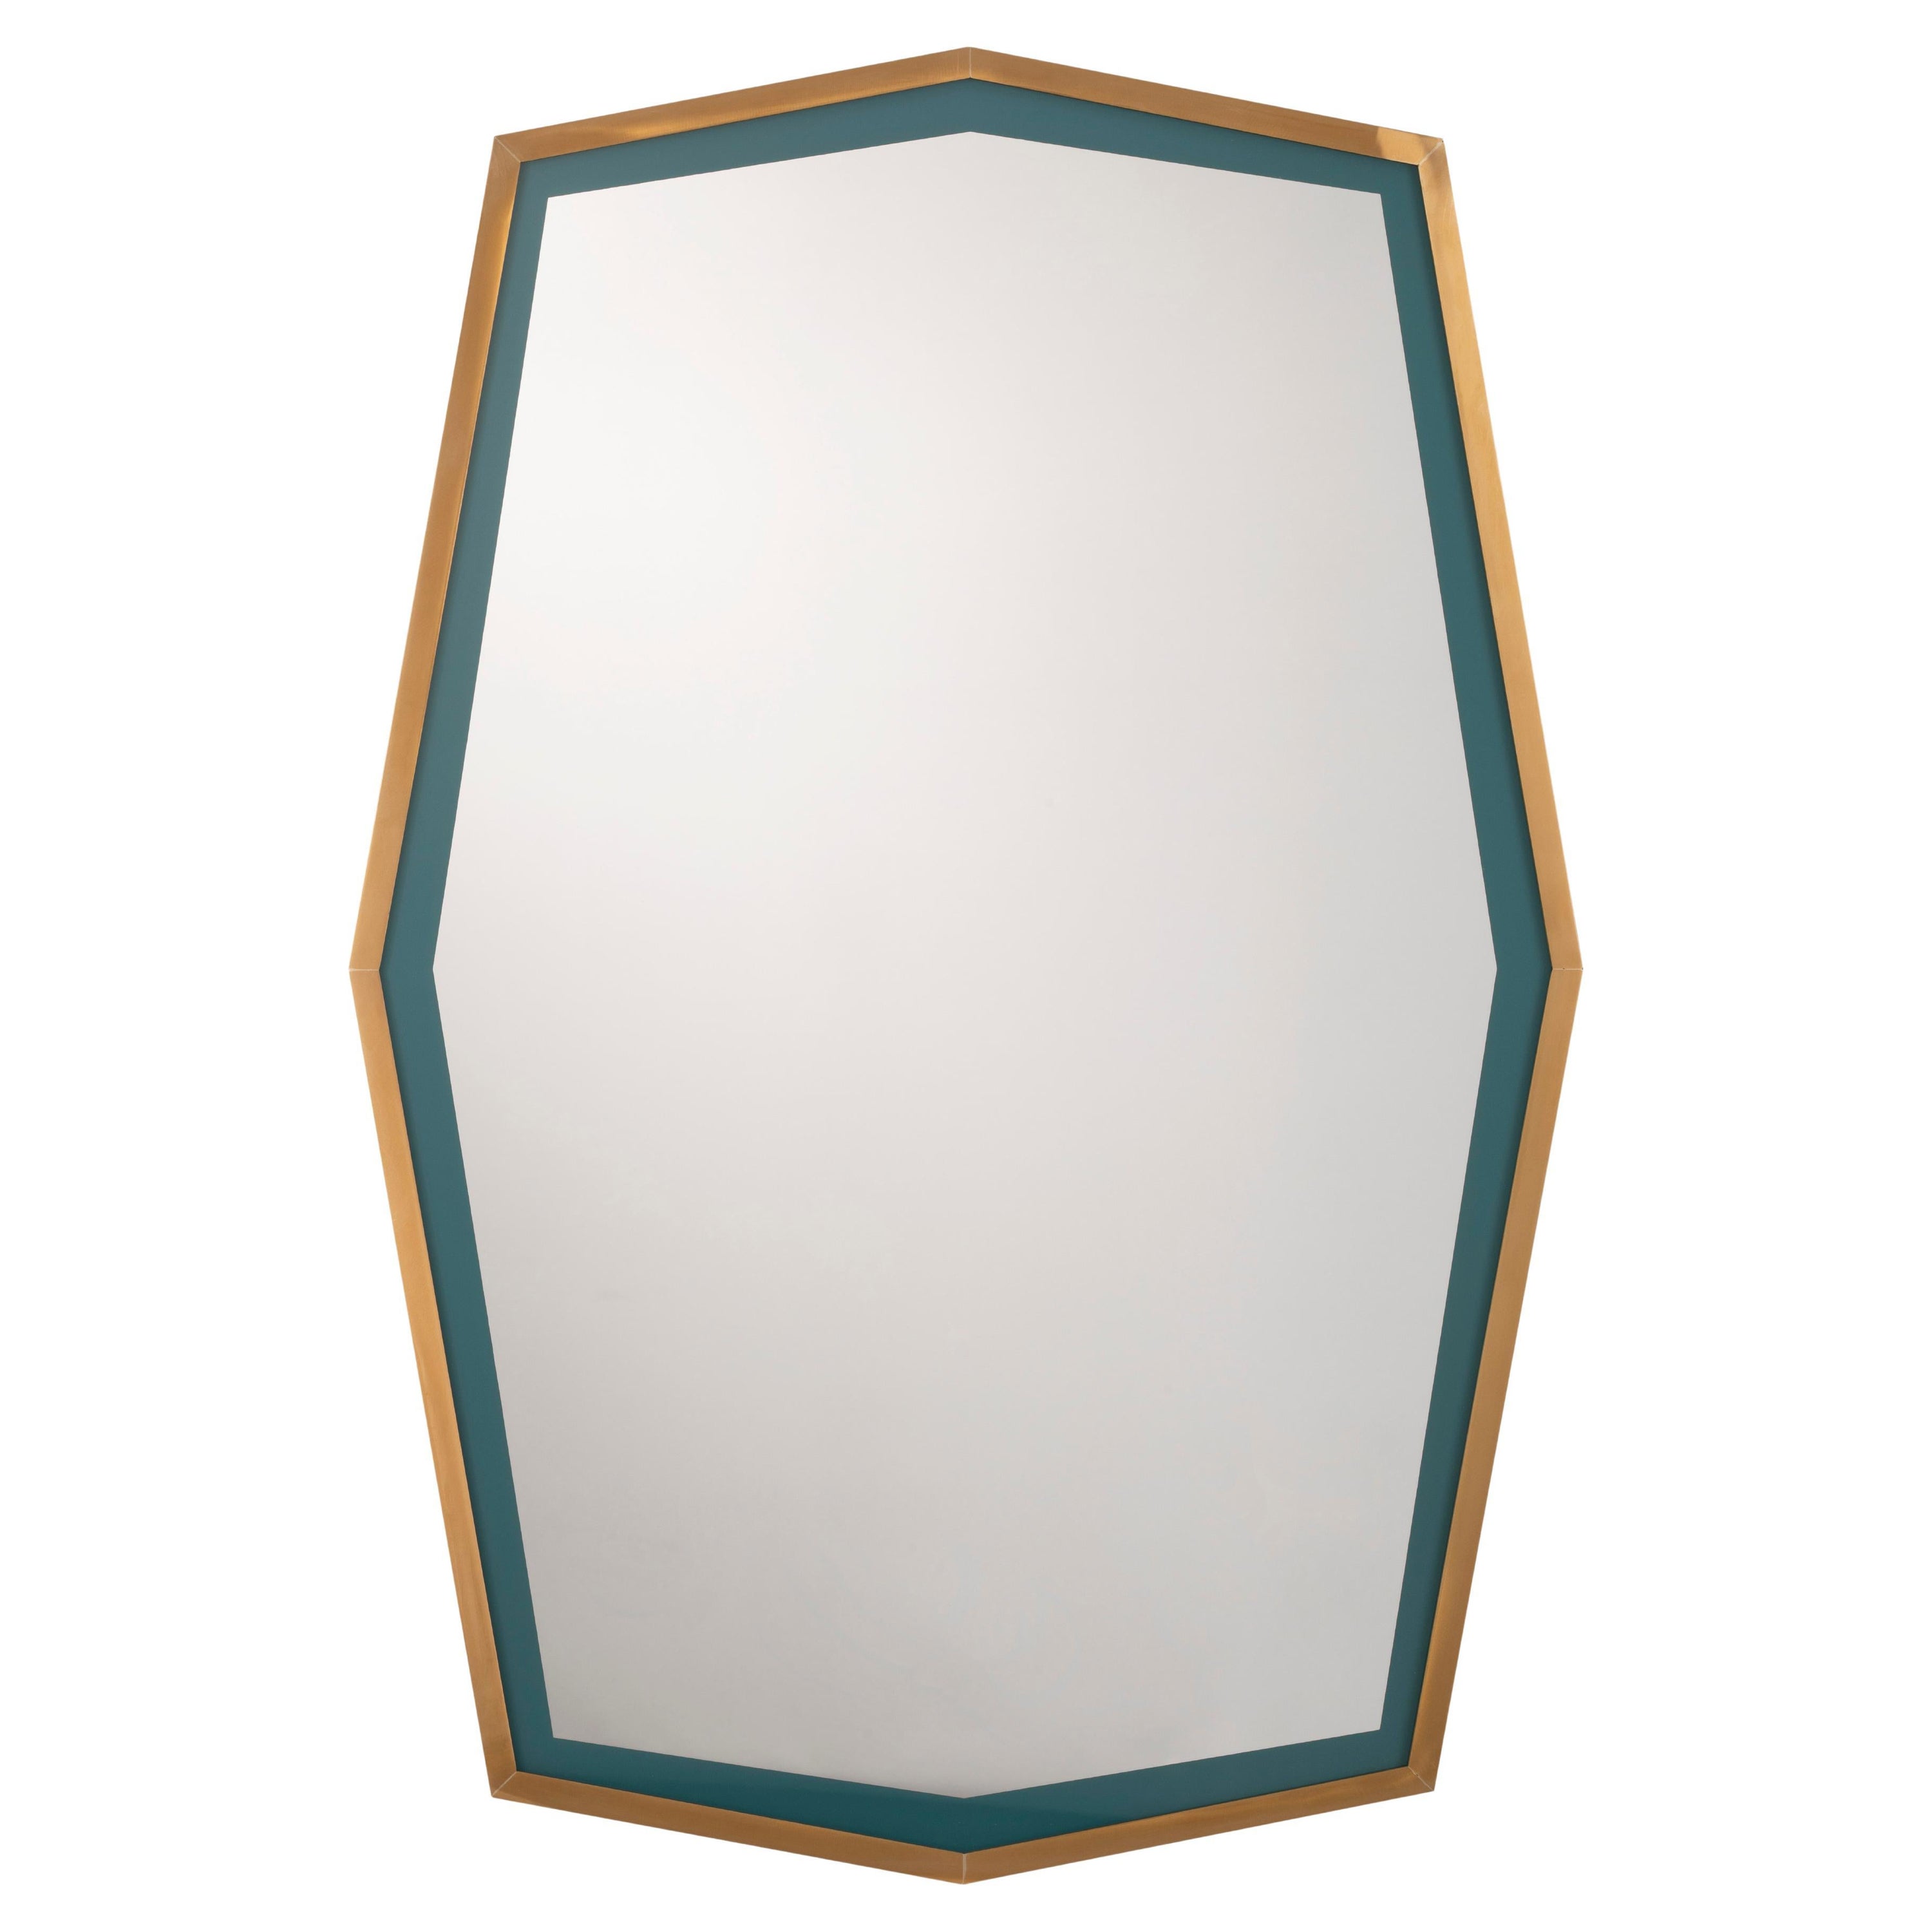 Novecento Double Frame Brass Mirror, Natural Finish